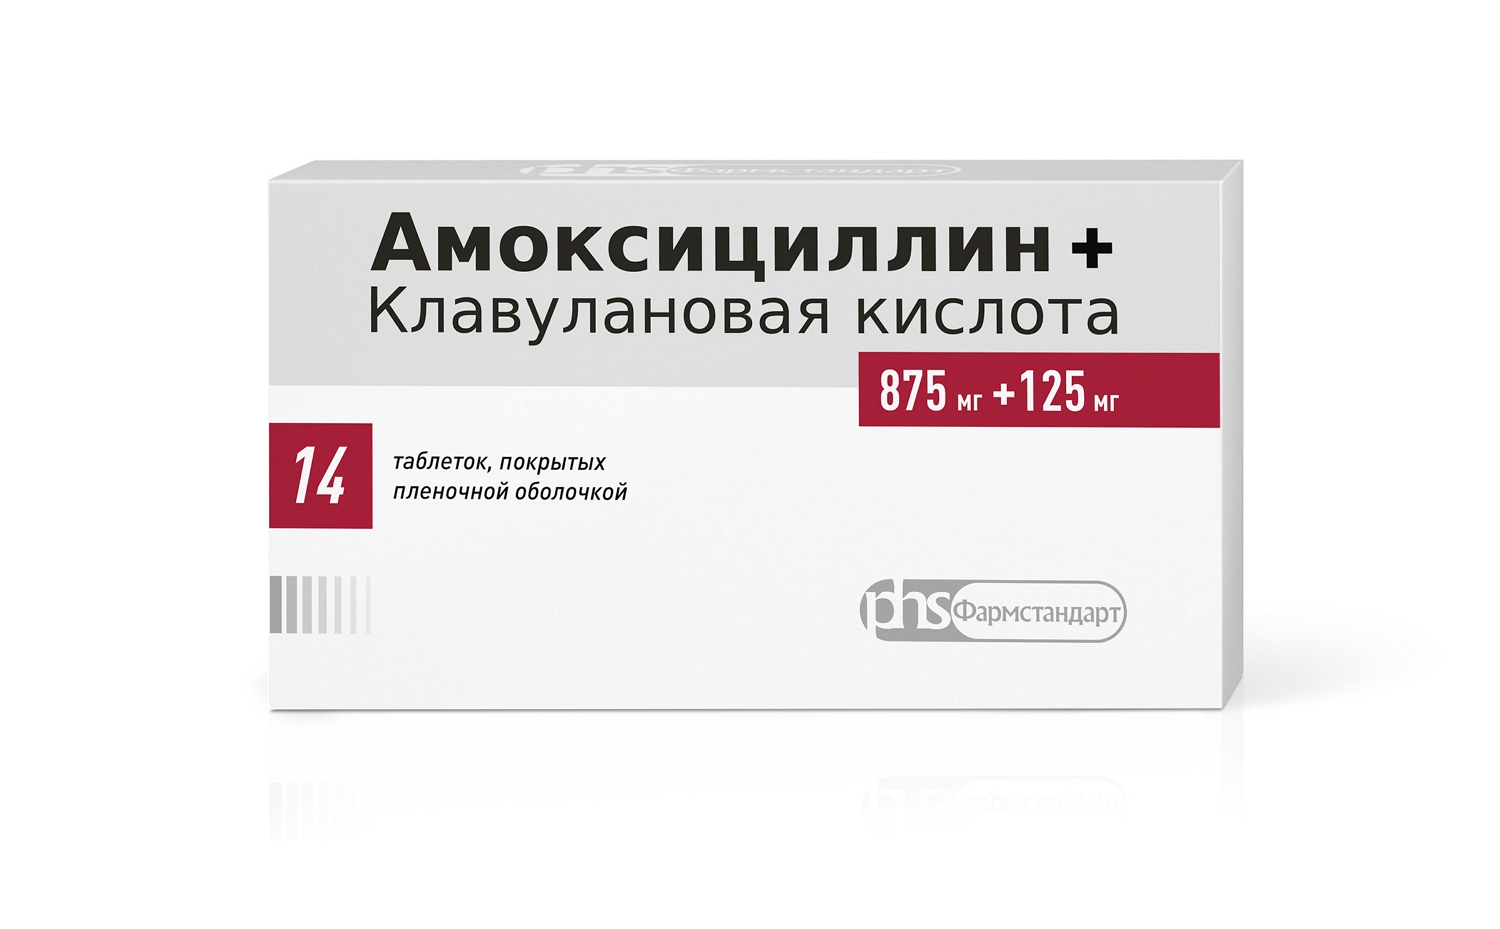 Amoxicilina 875 mg ácido clavulánico 125 mg para que sirve